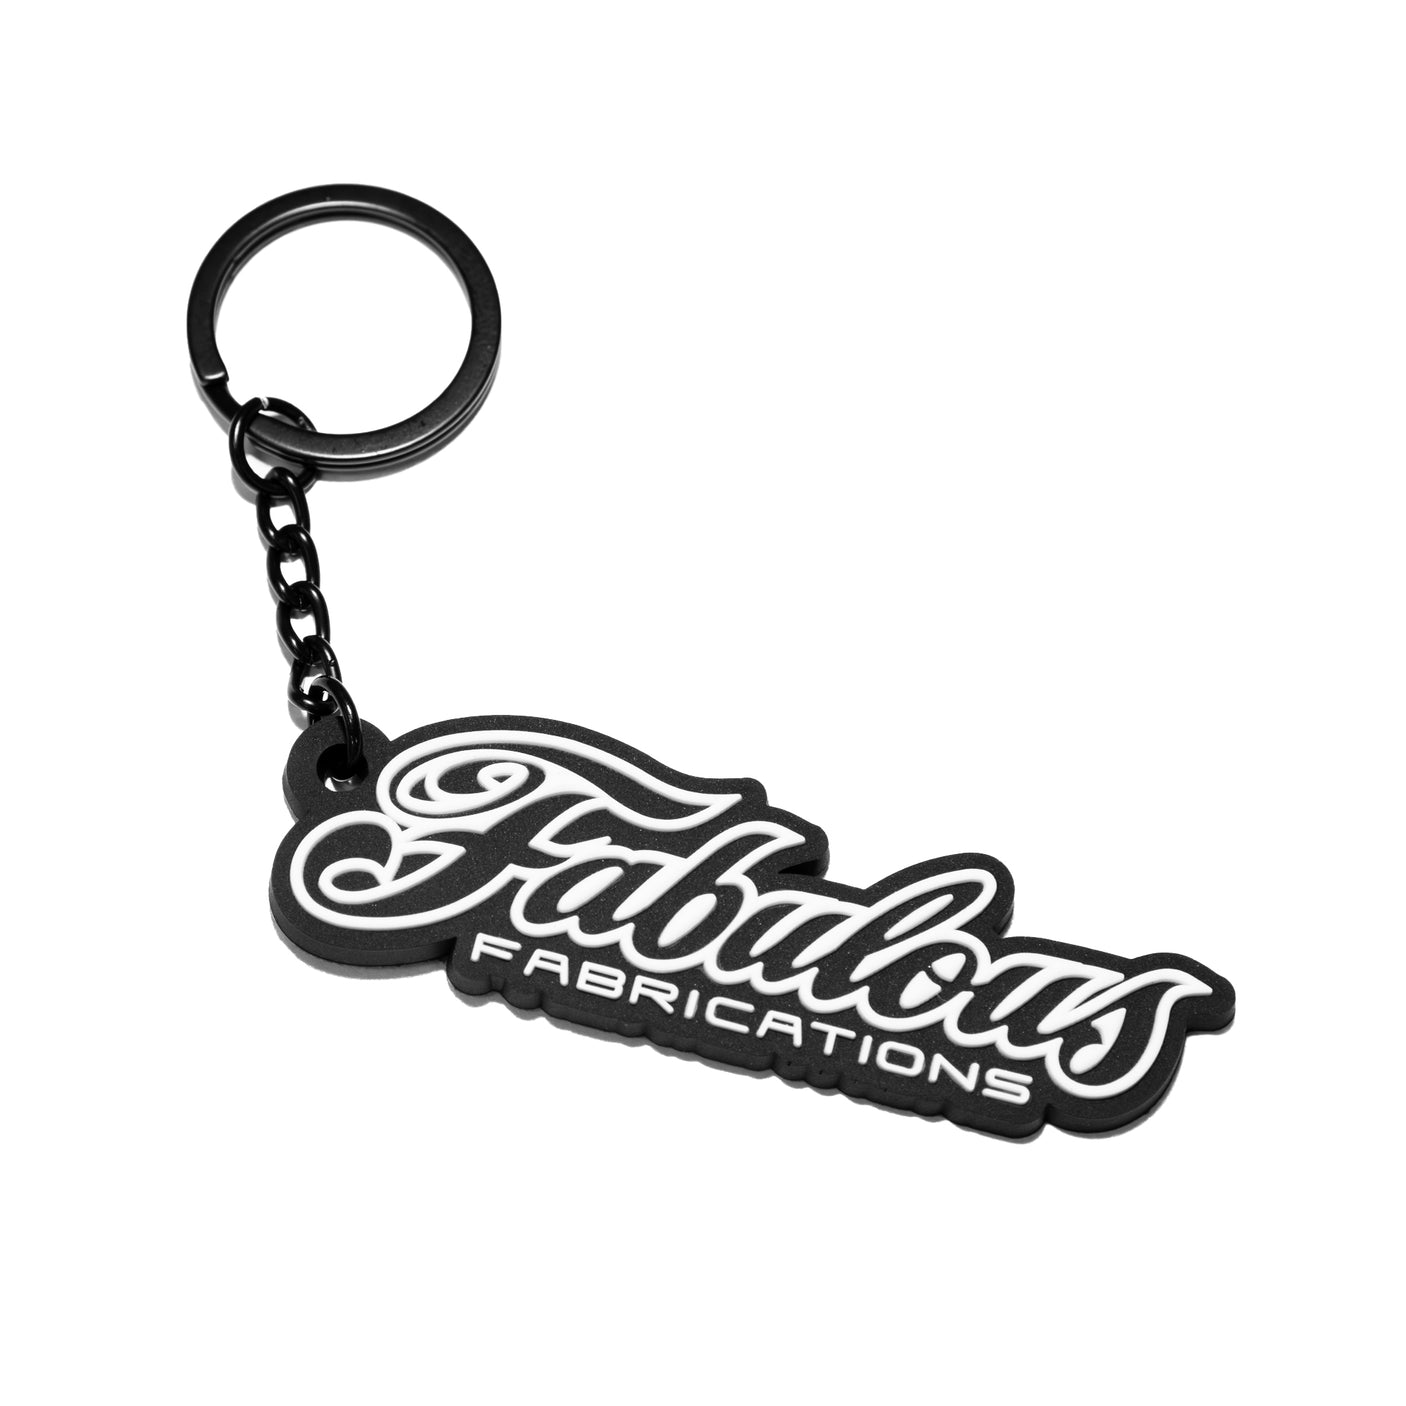 Fabulous Fabrications Logo Key Chain